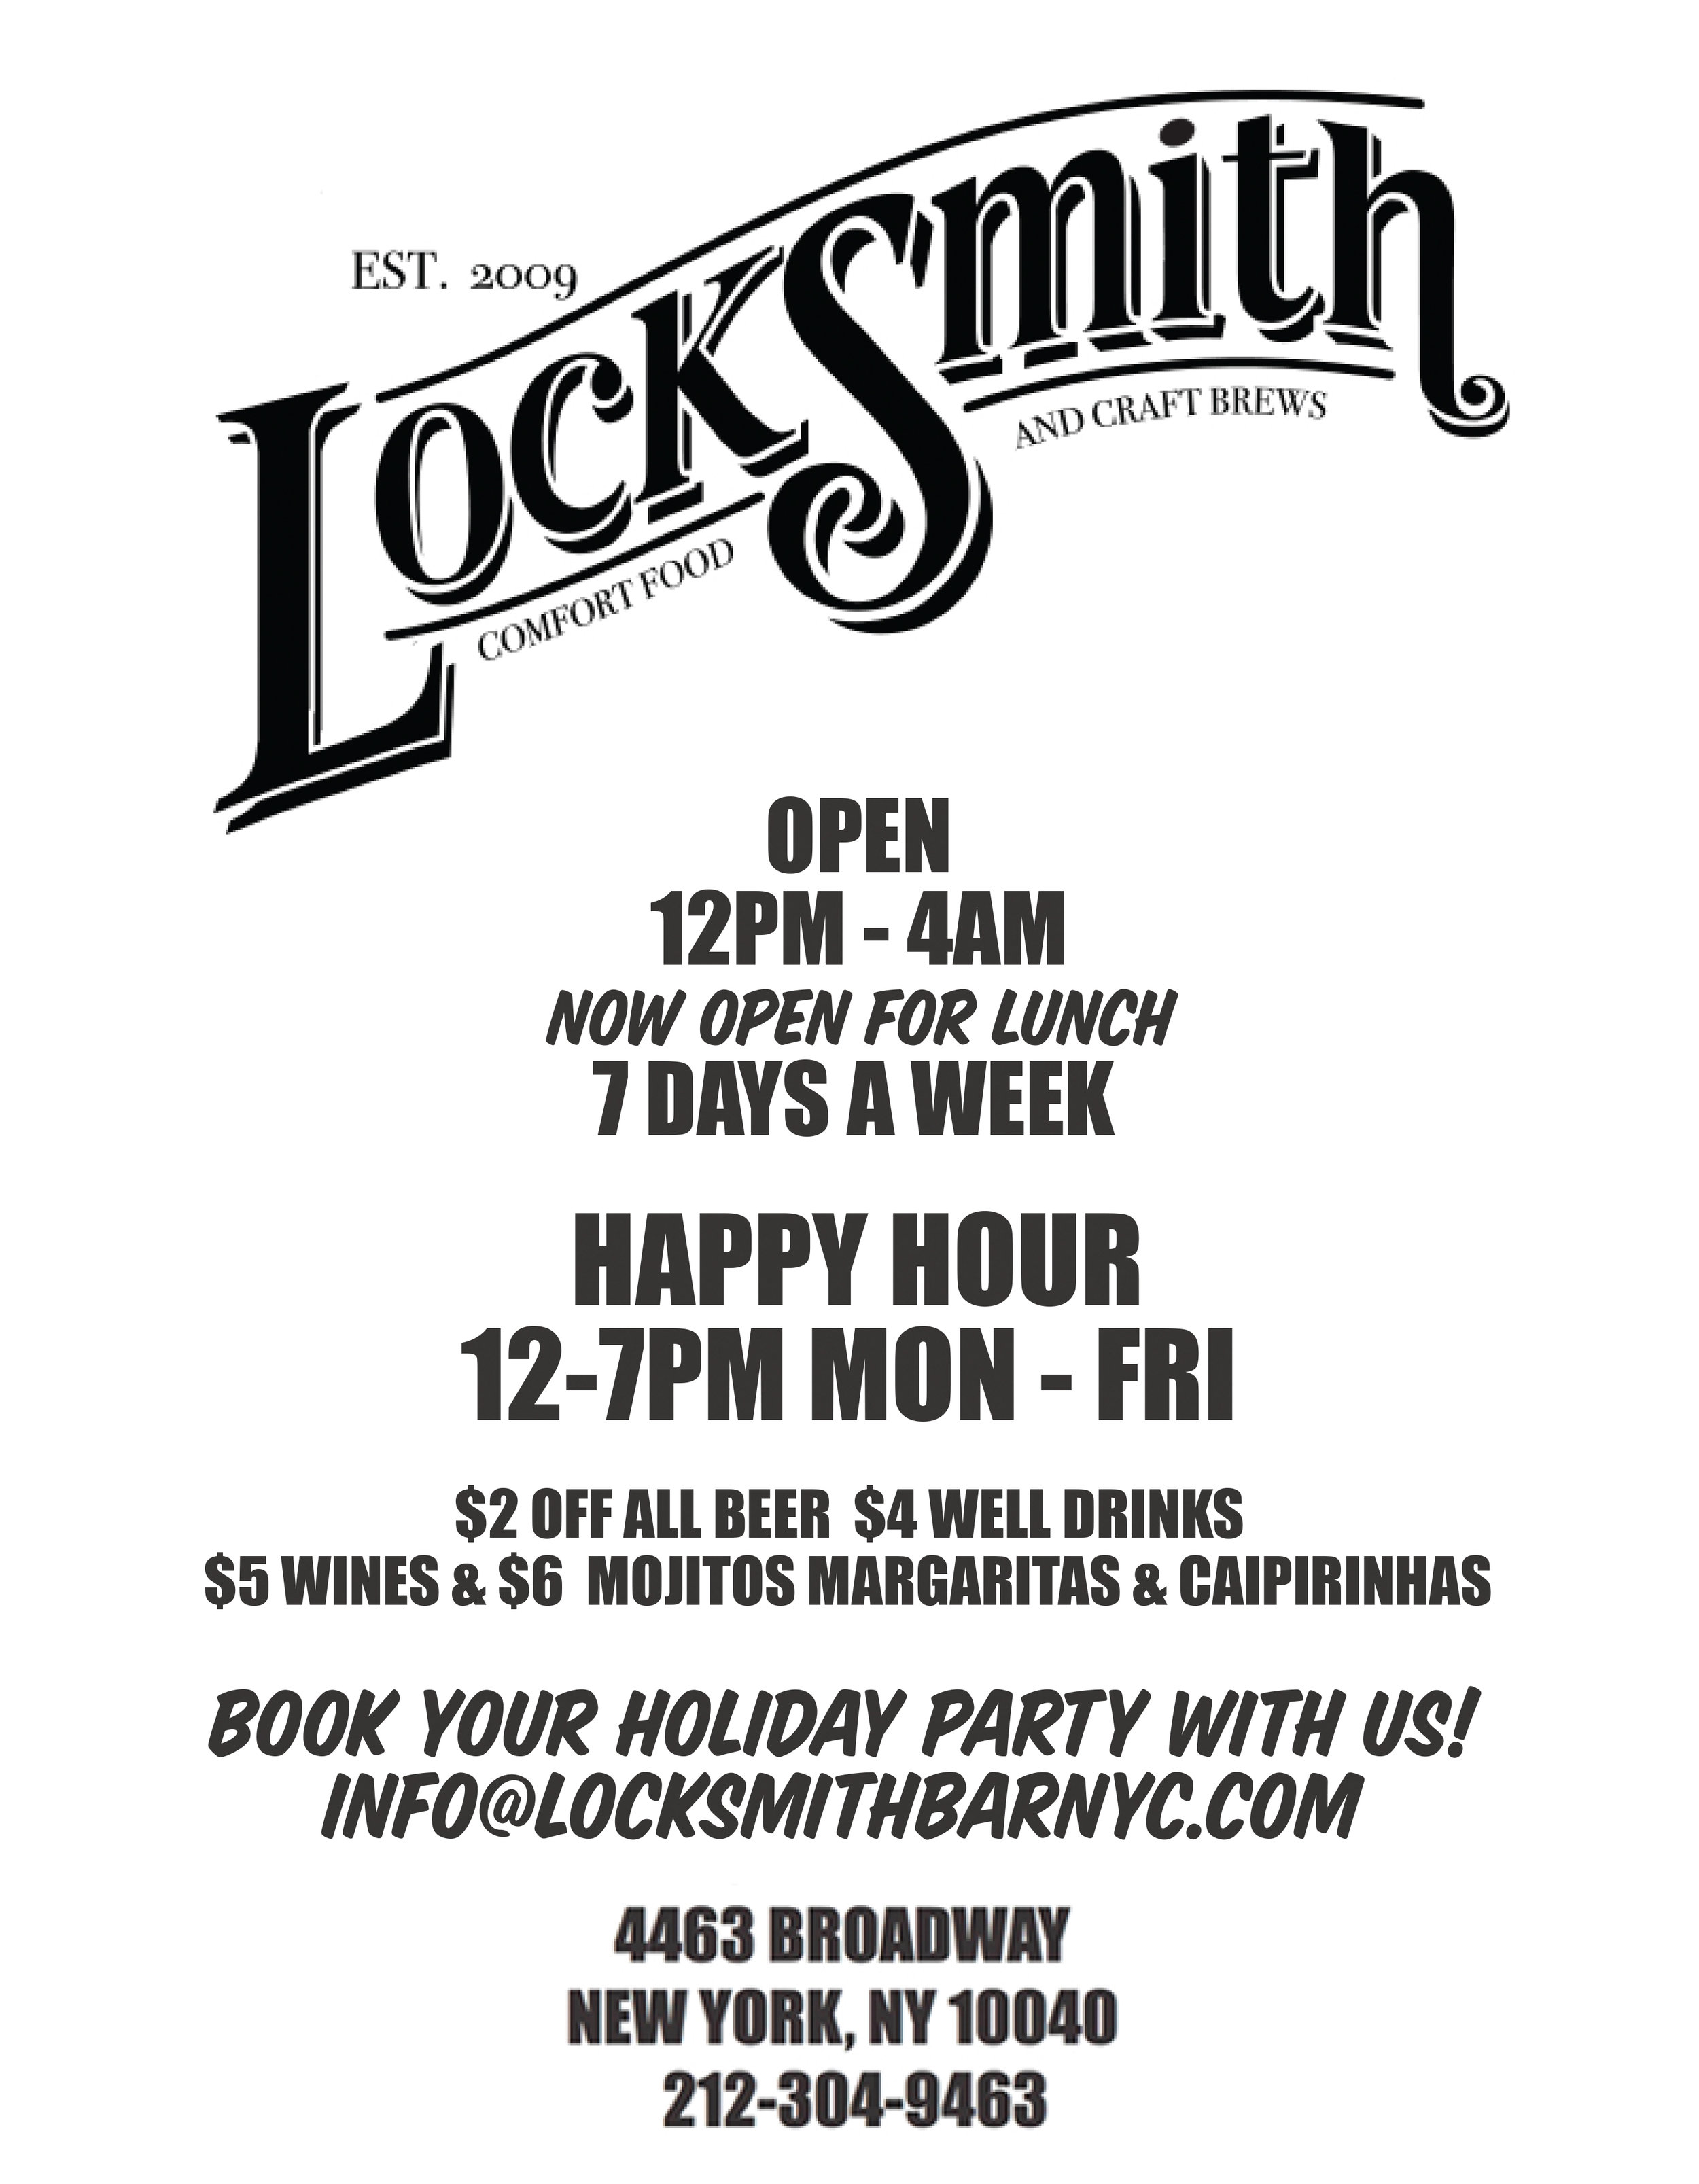 Locksmith Bar food and beer